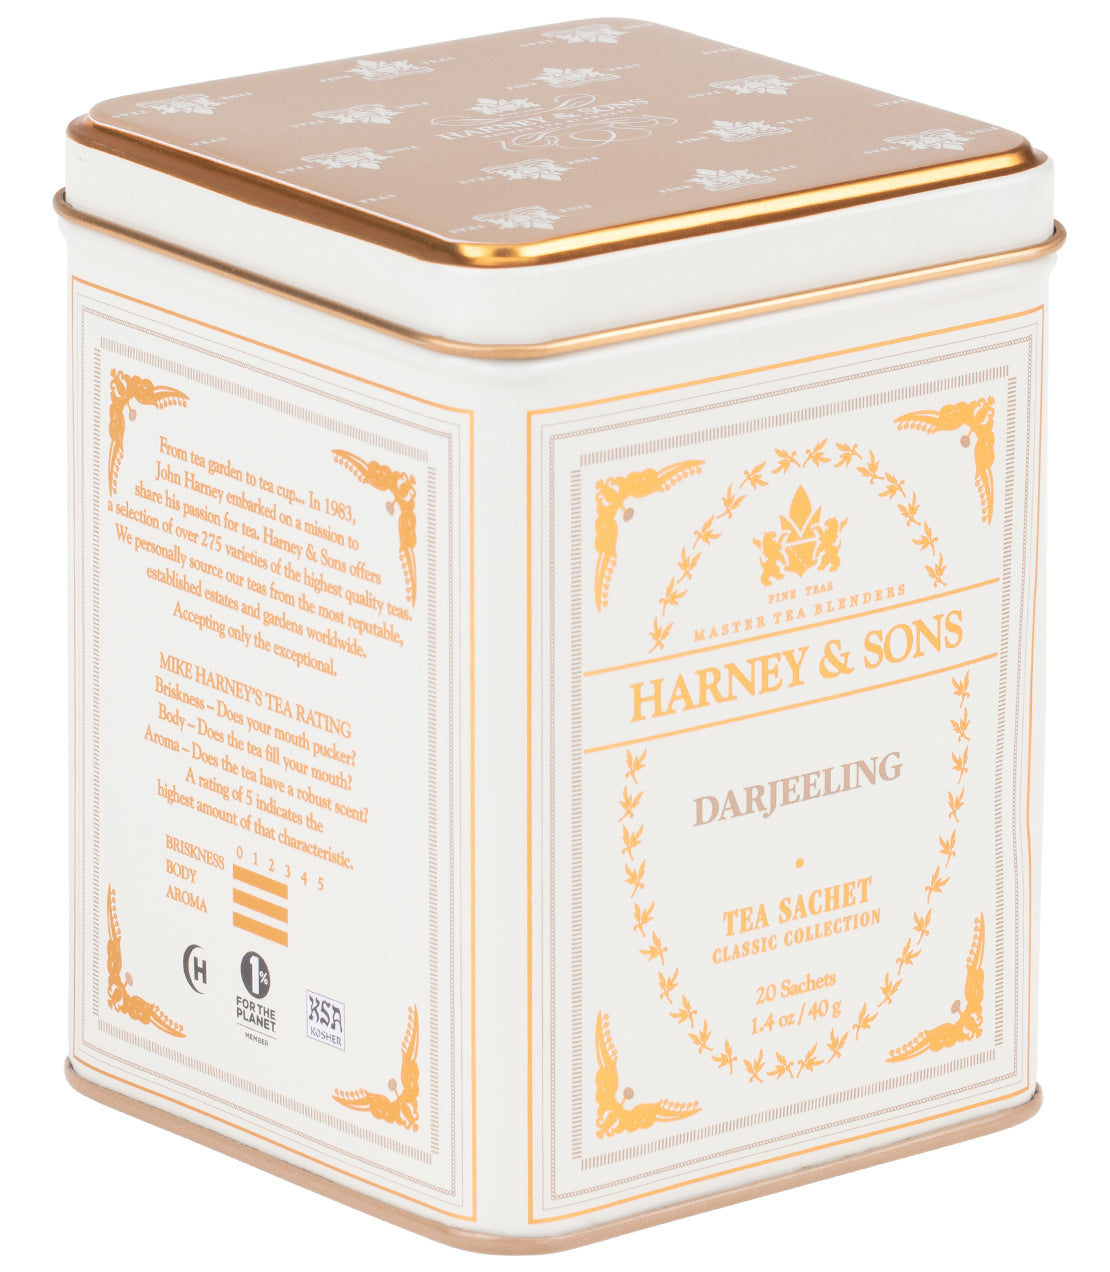 Darjeeling, Classic Tin of 20 Sachets - Sachets Single Classic Tin of 20 Sachets - Harney & Sons Fine Teas